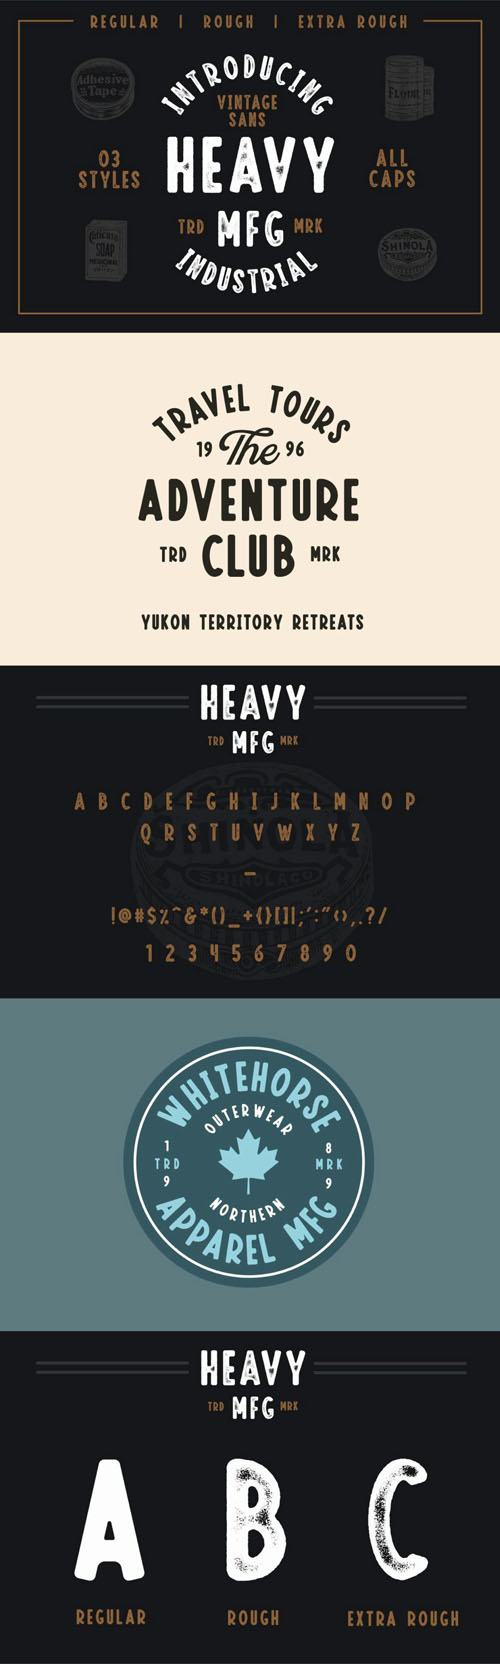 Heavy MFG - Vintage Press Inspired Sans Serif Font